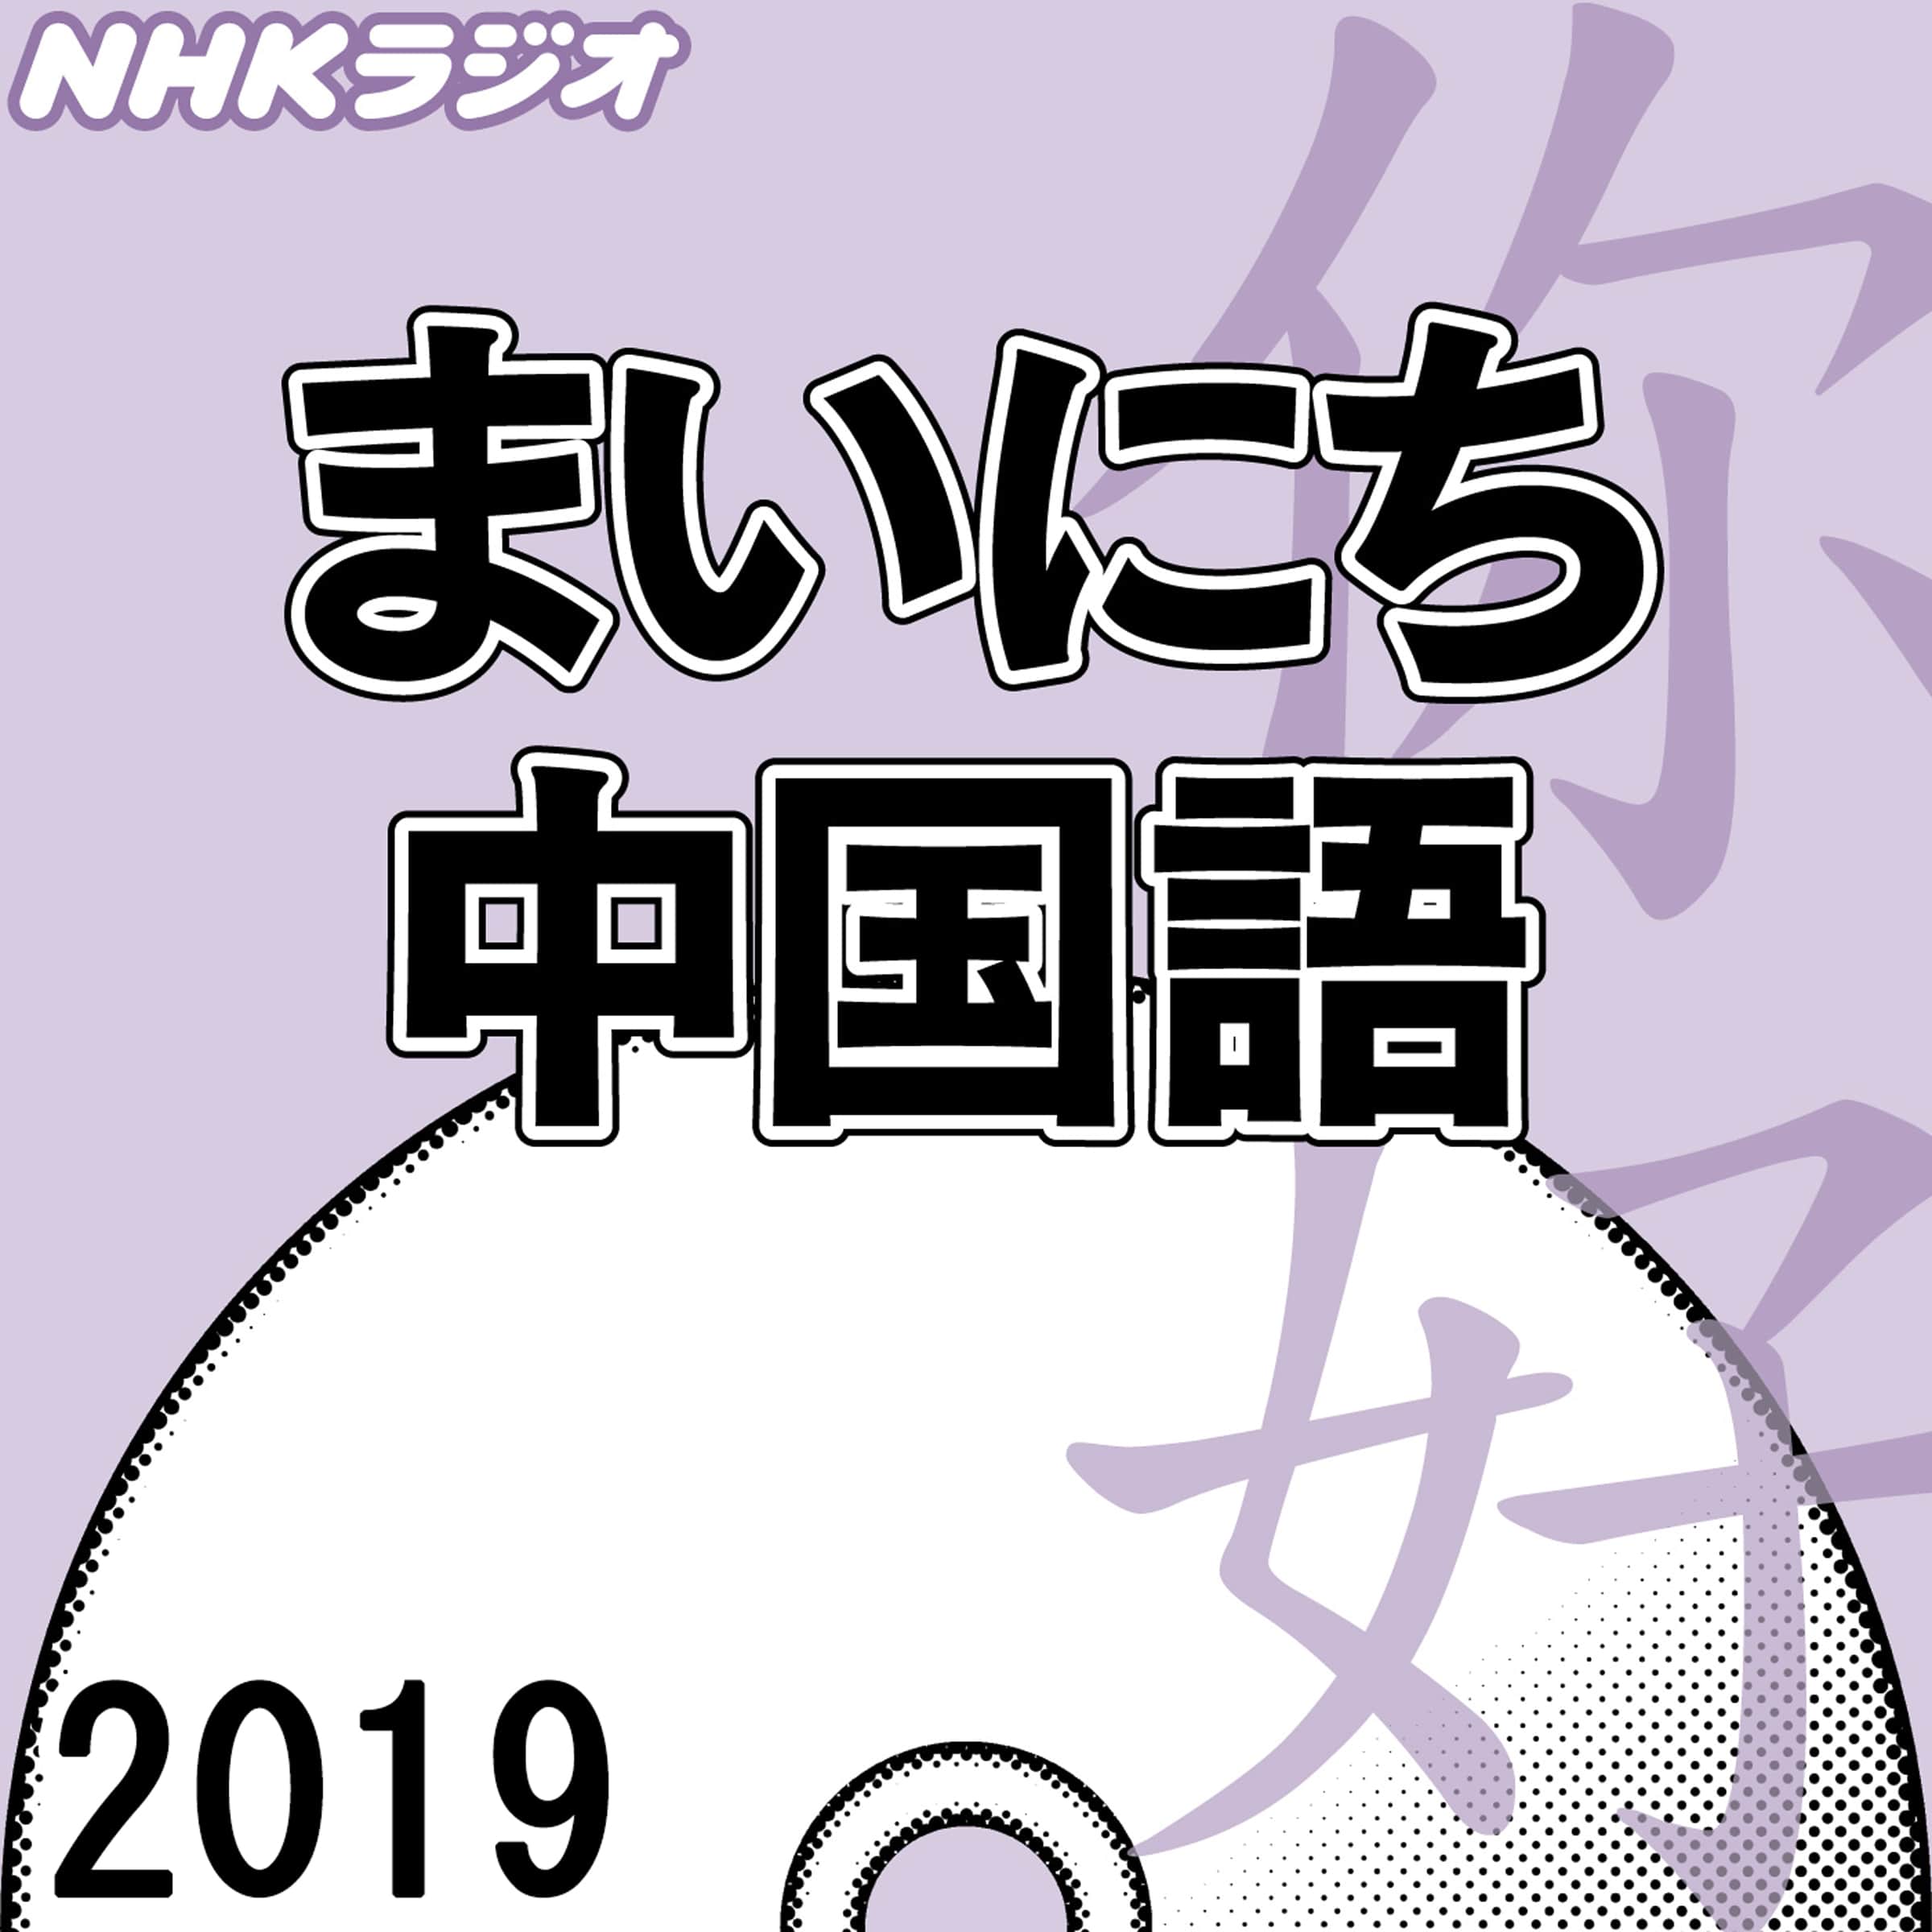 NHK語学 番組音声版&CD音声販売audiobook.jpストア - audiobook.jp